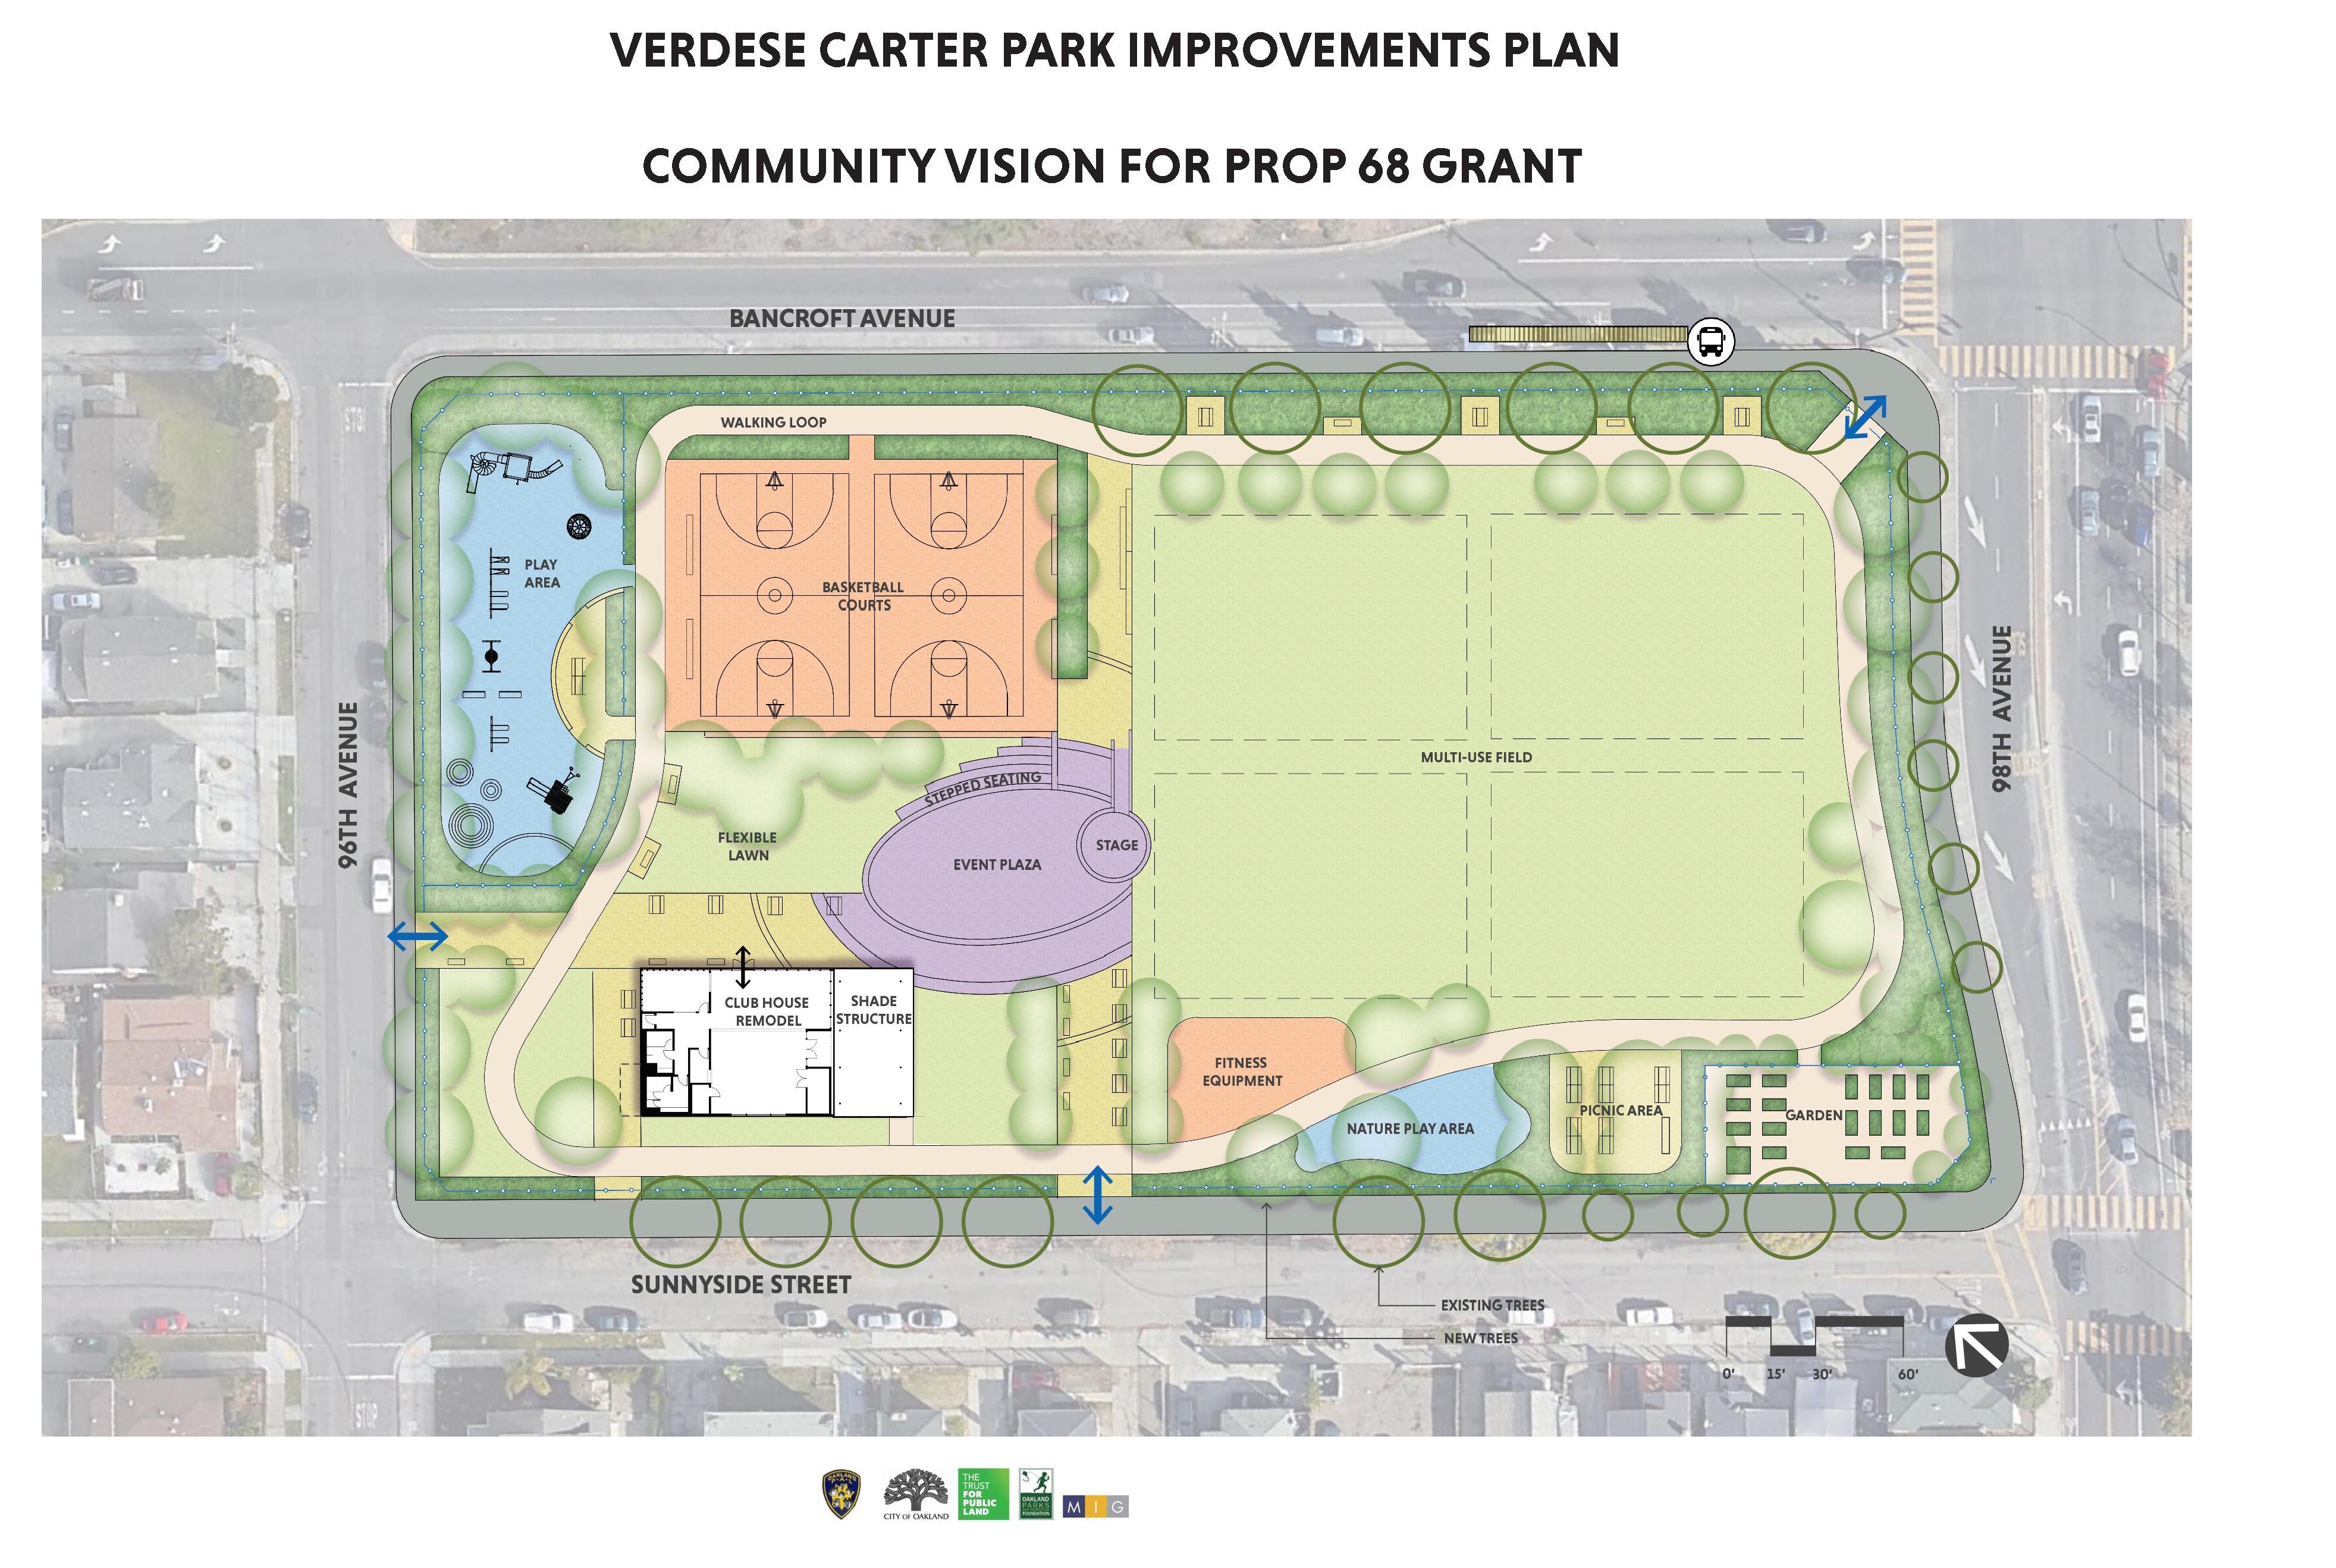 Verdese Carter Improvement Plans